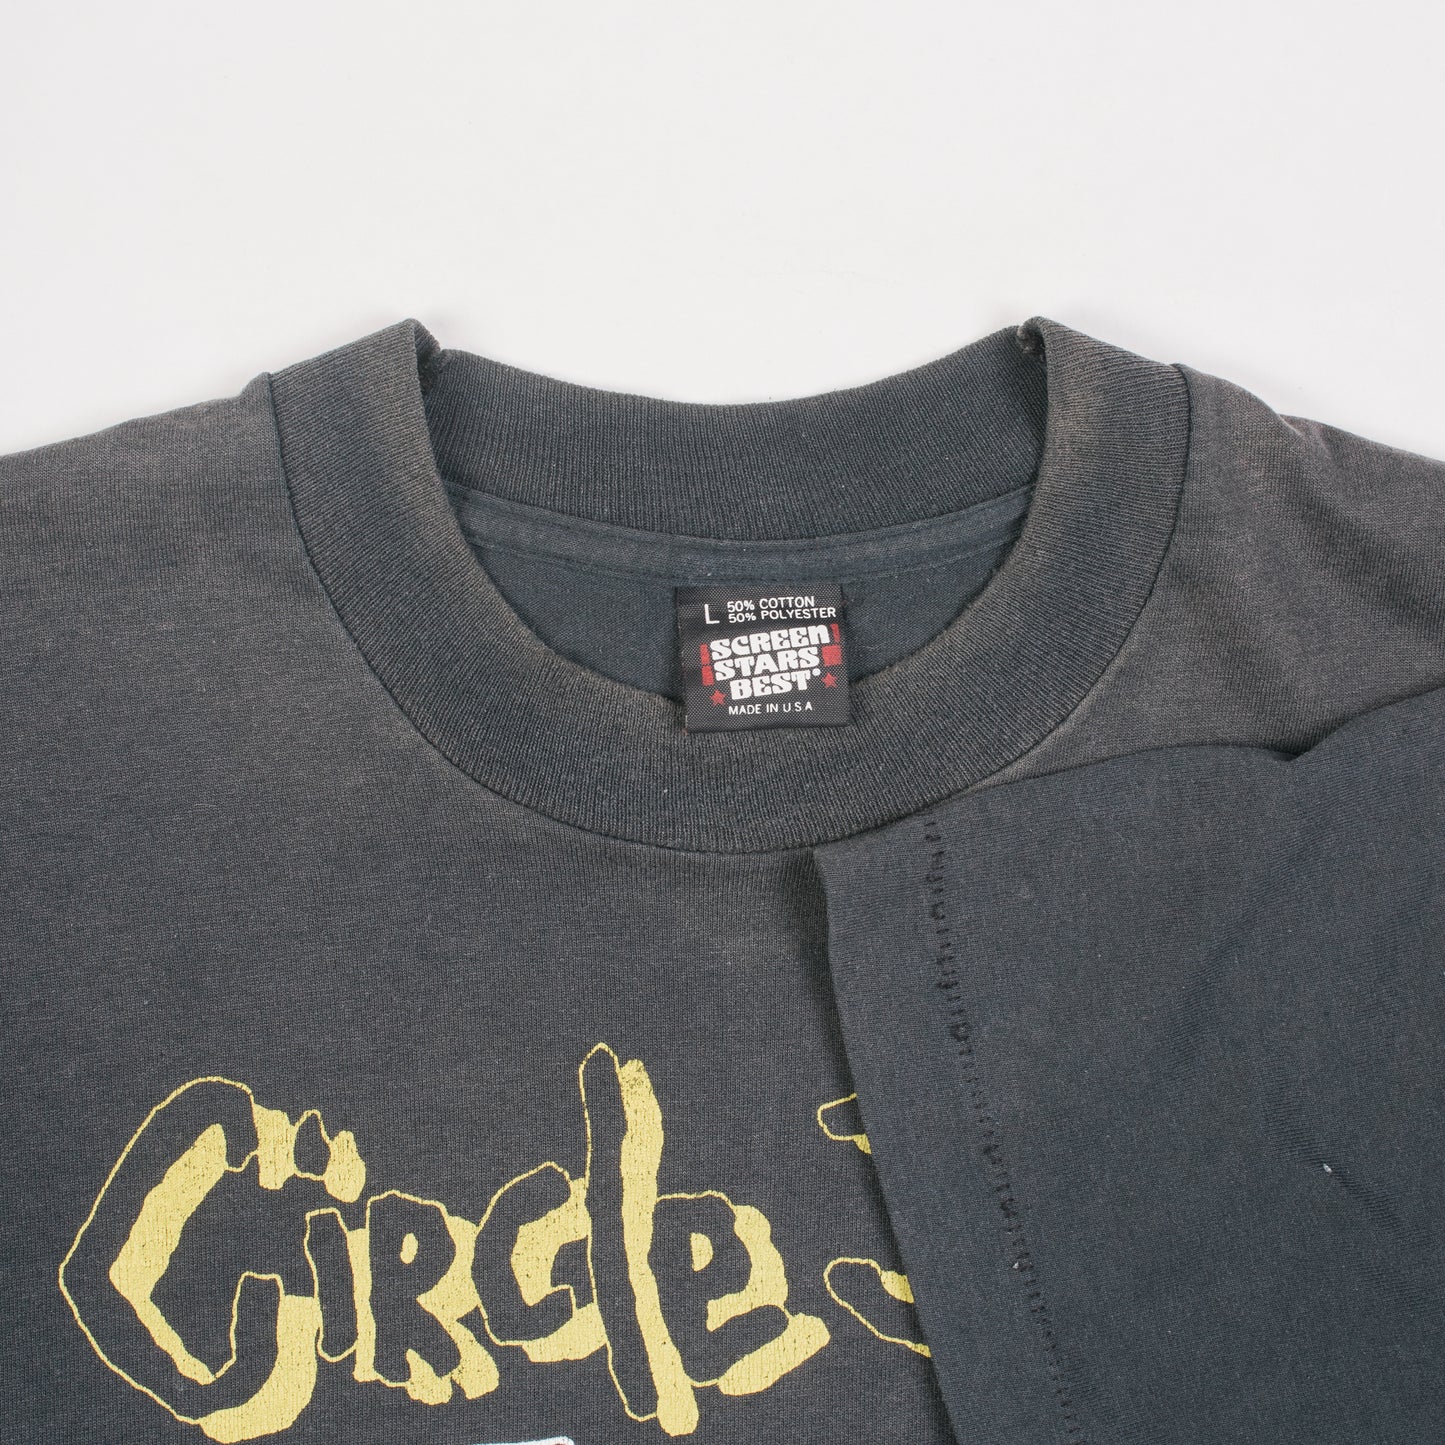 Vintage 80’s Circle Jerks 10th Anniversary Tour T-Shirt